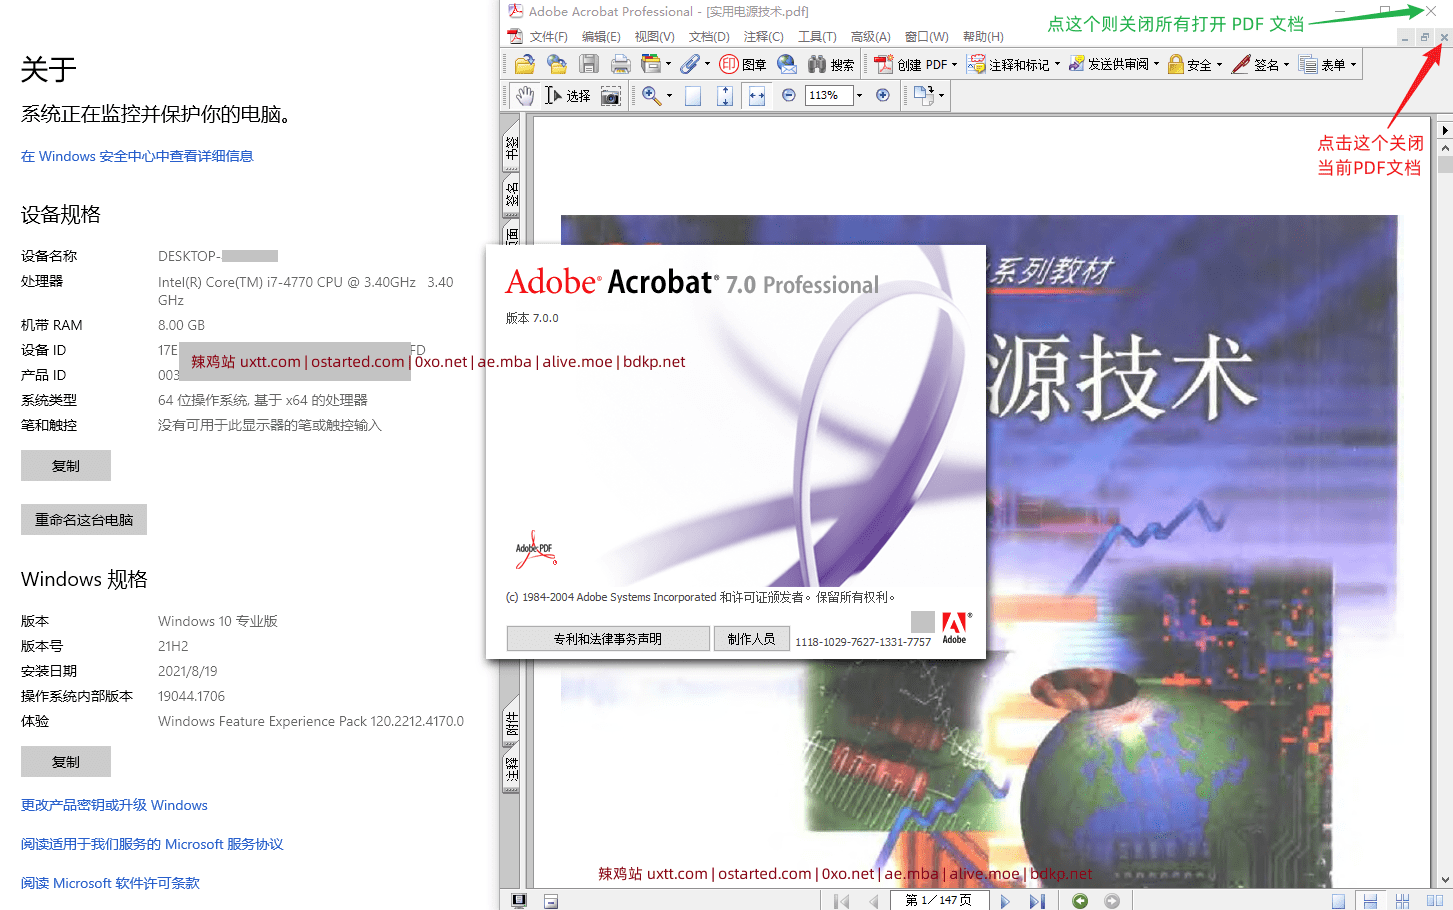 Acrobat Pro 7.0 CN 珍藏版 Adobe Acrobat Professional 7.0 简体中文版 PDF 编辑软件 - 第5张图片